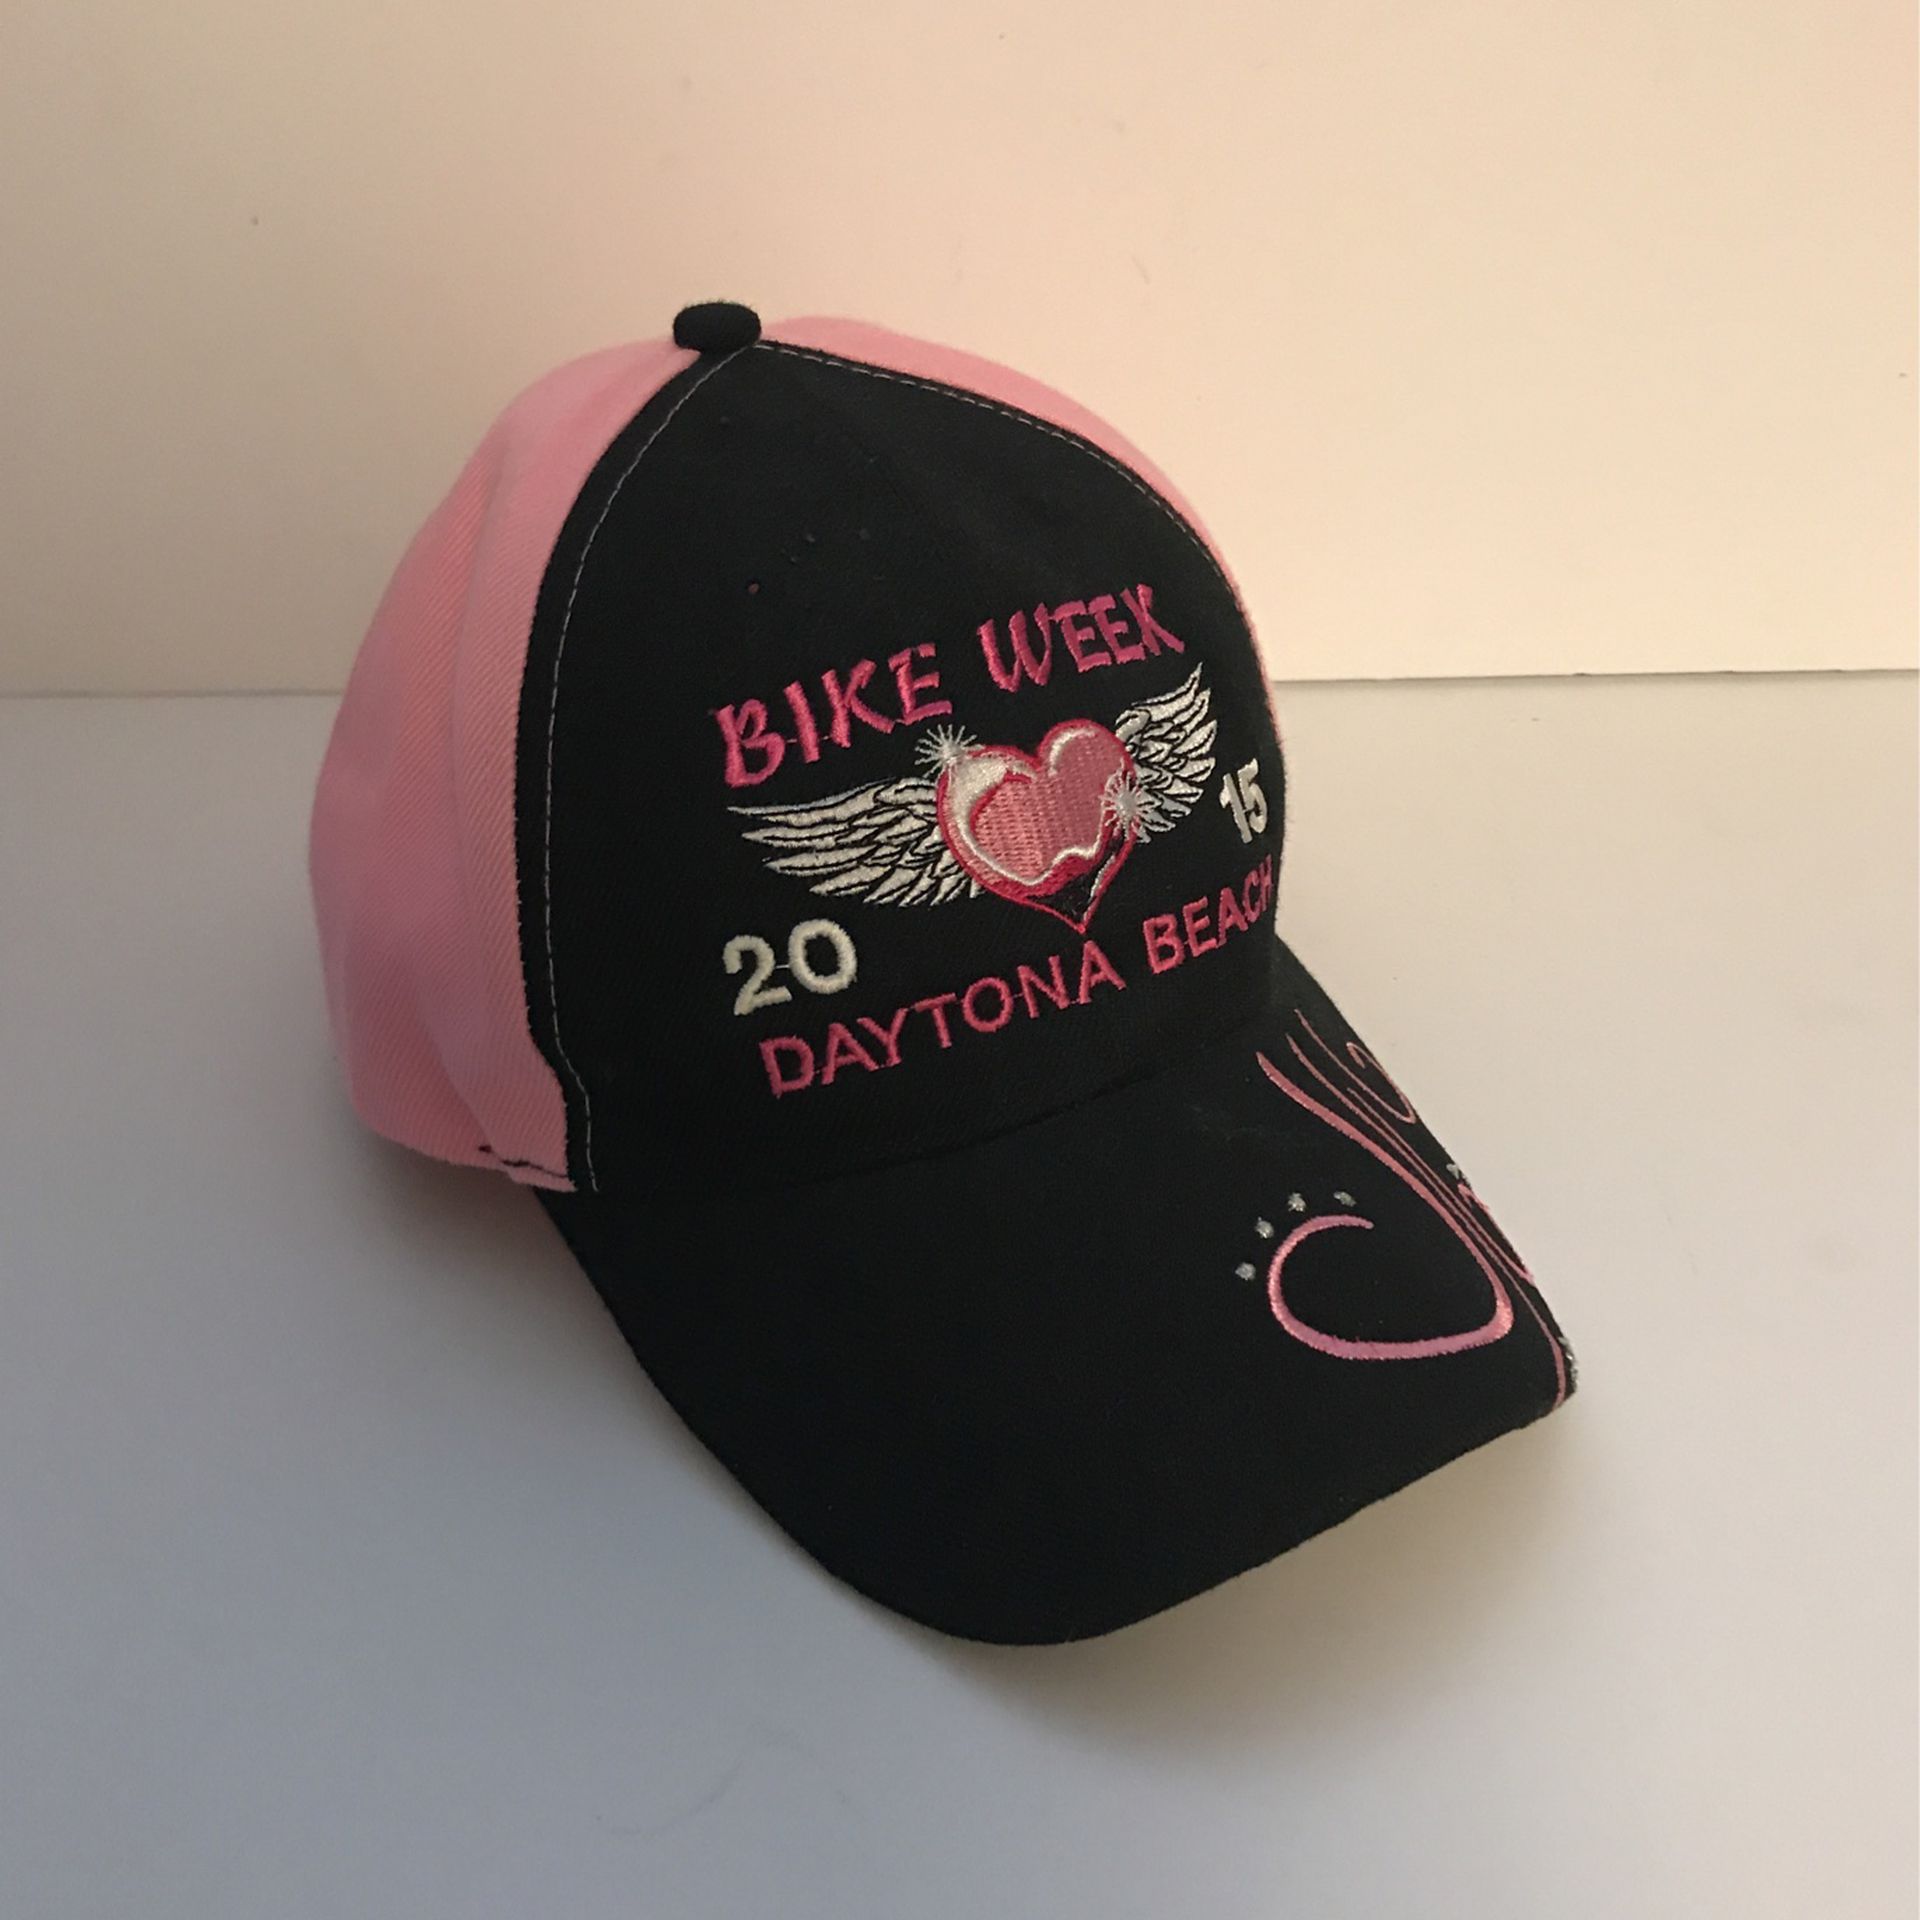 Pink & Black Daytona Bike Week 2015 Hat